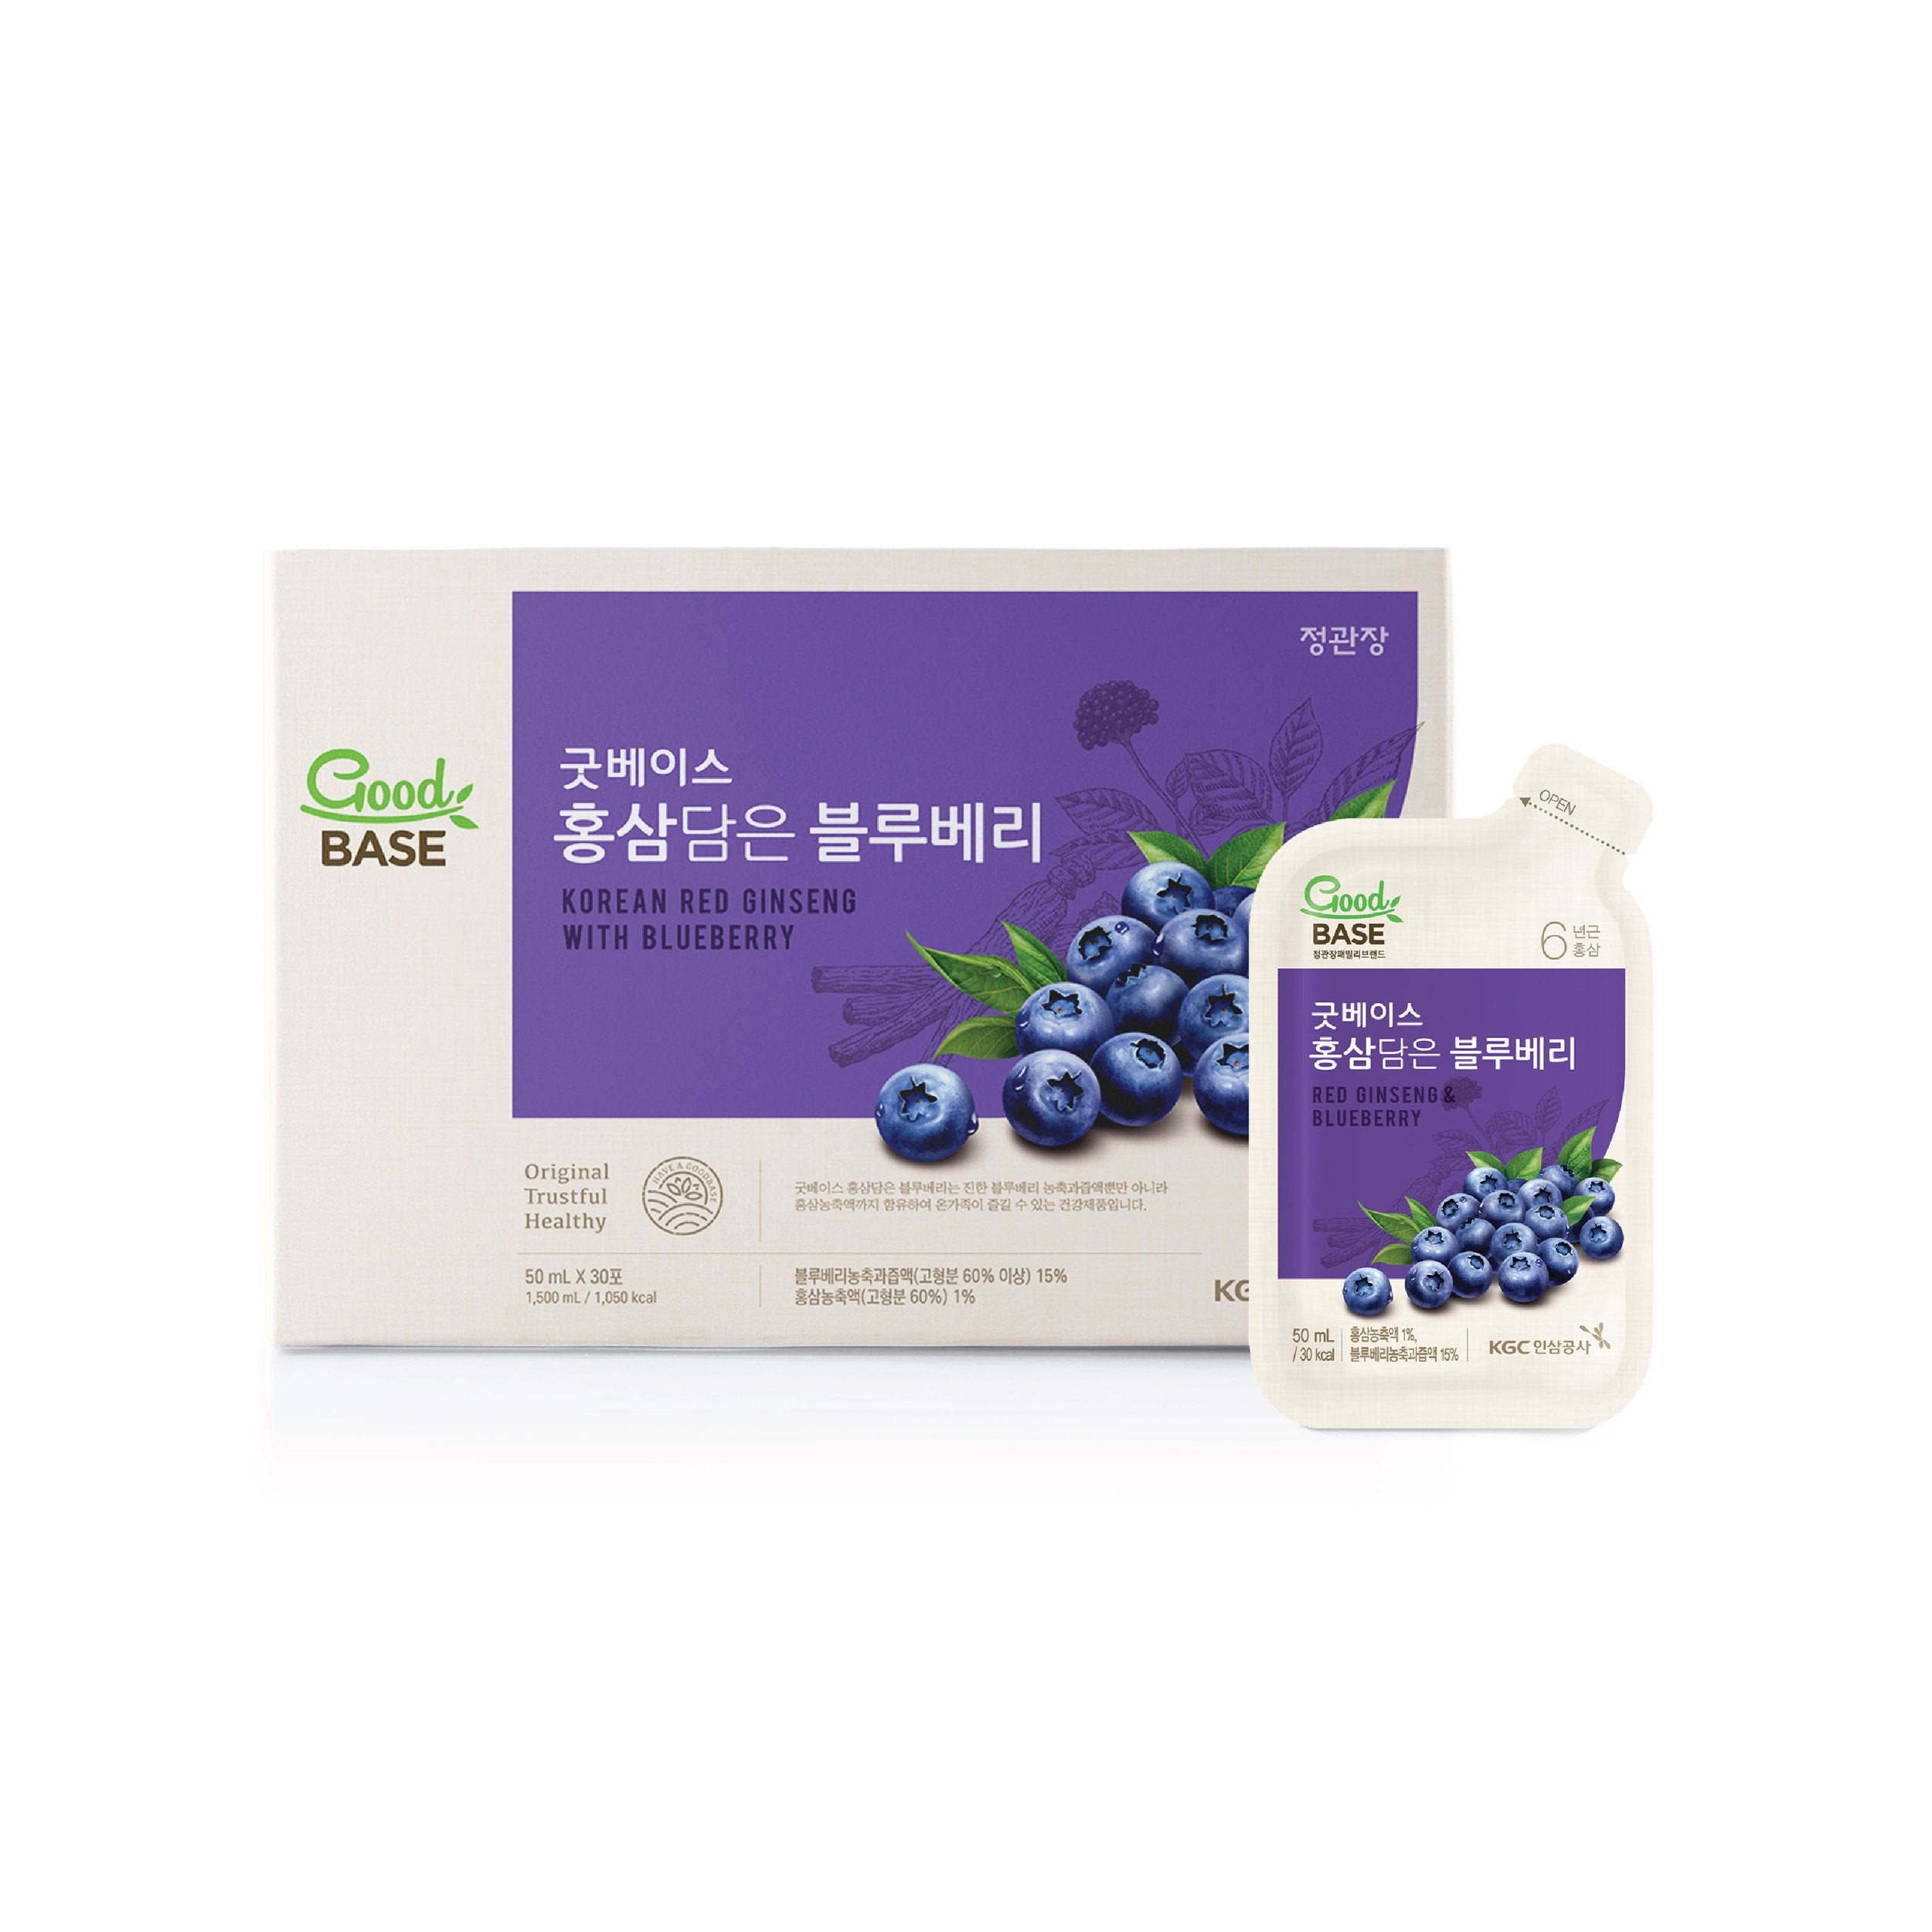 Good Base Red Ginseng & Blueberry - Una mezcla poderosa